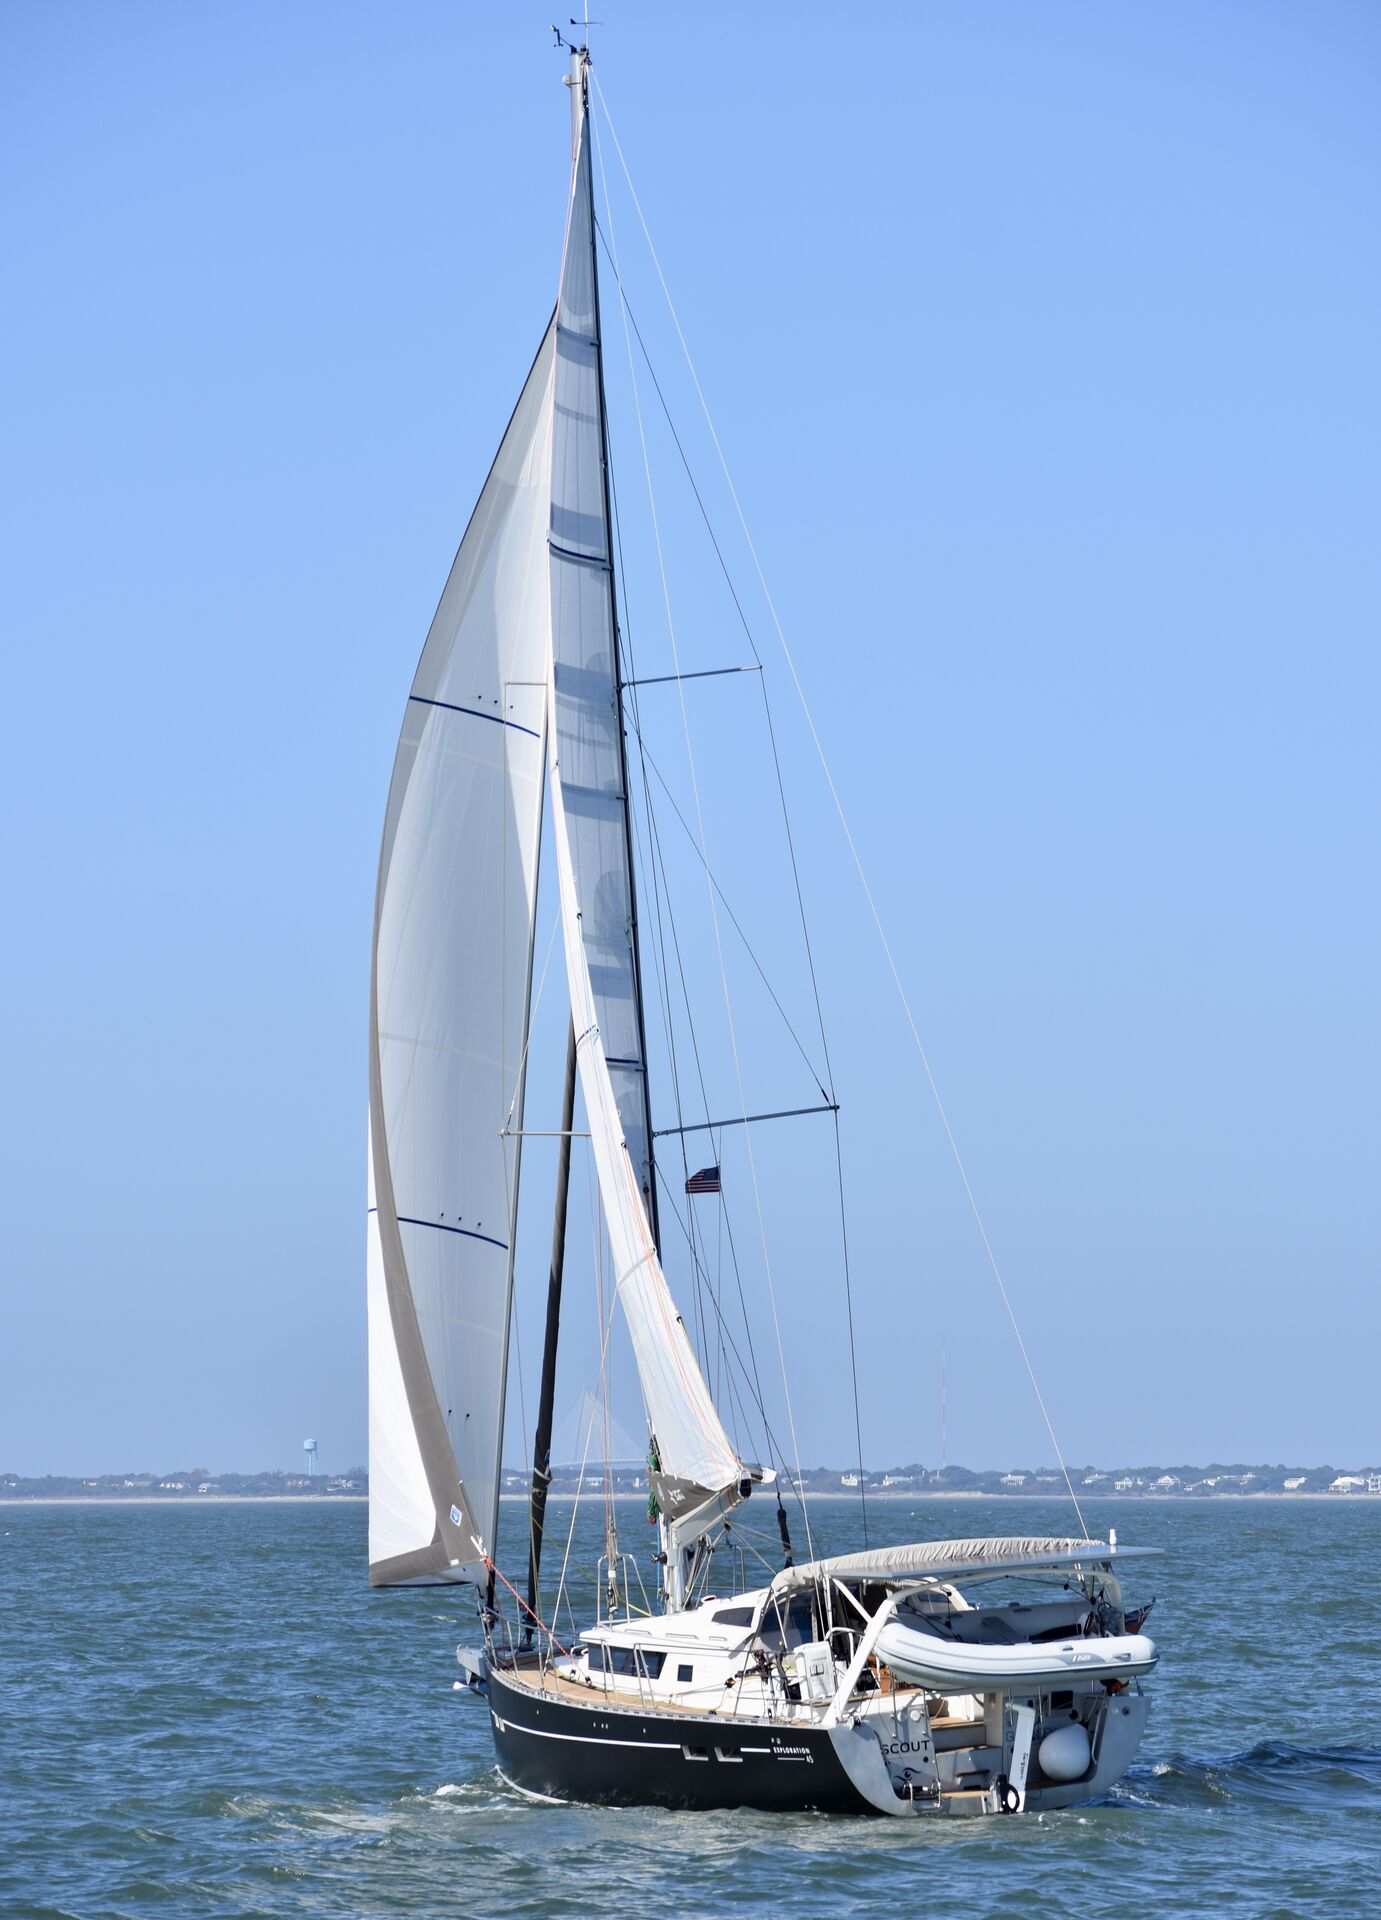 Under sail as we head towards the Charleston breakwater